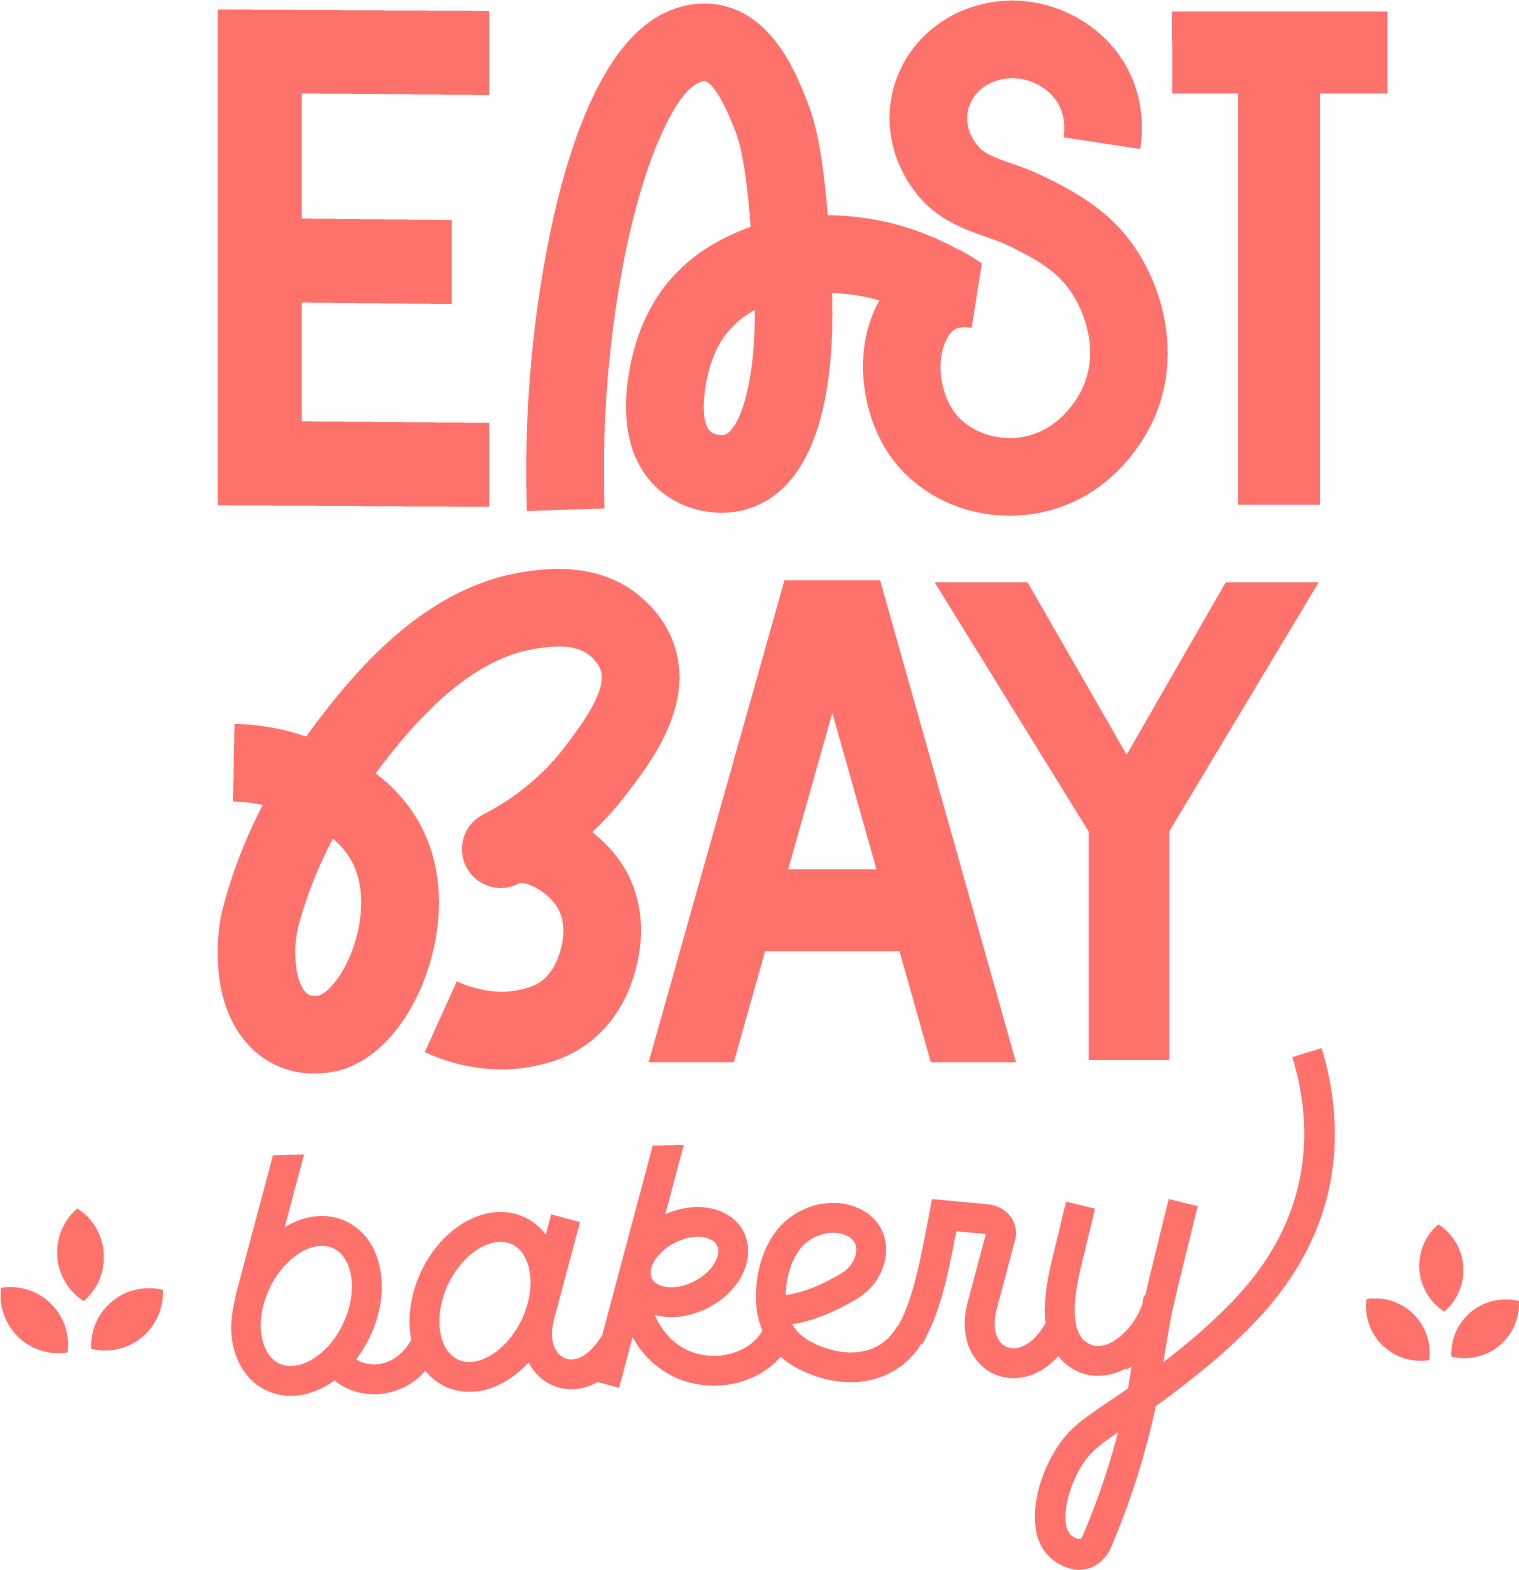 East bay bakery